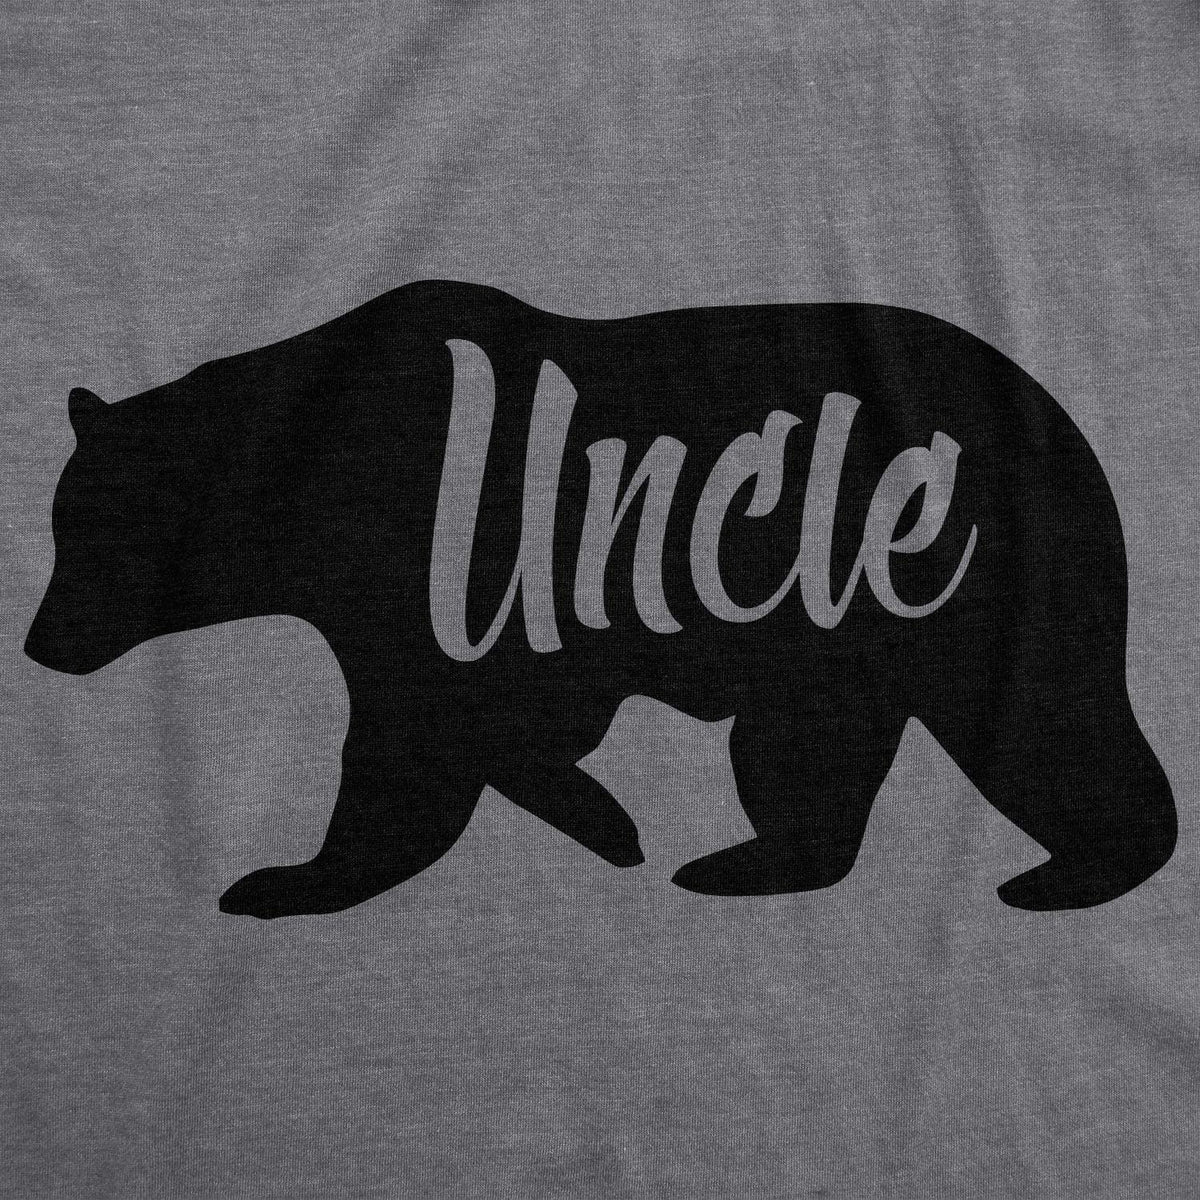 Uncle Bear Men&#39;s Tshirt  -  Crazy Dog T-Shirts